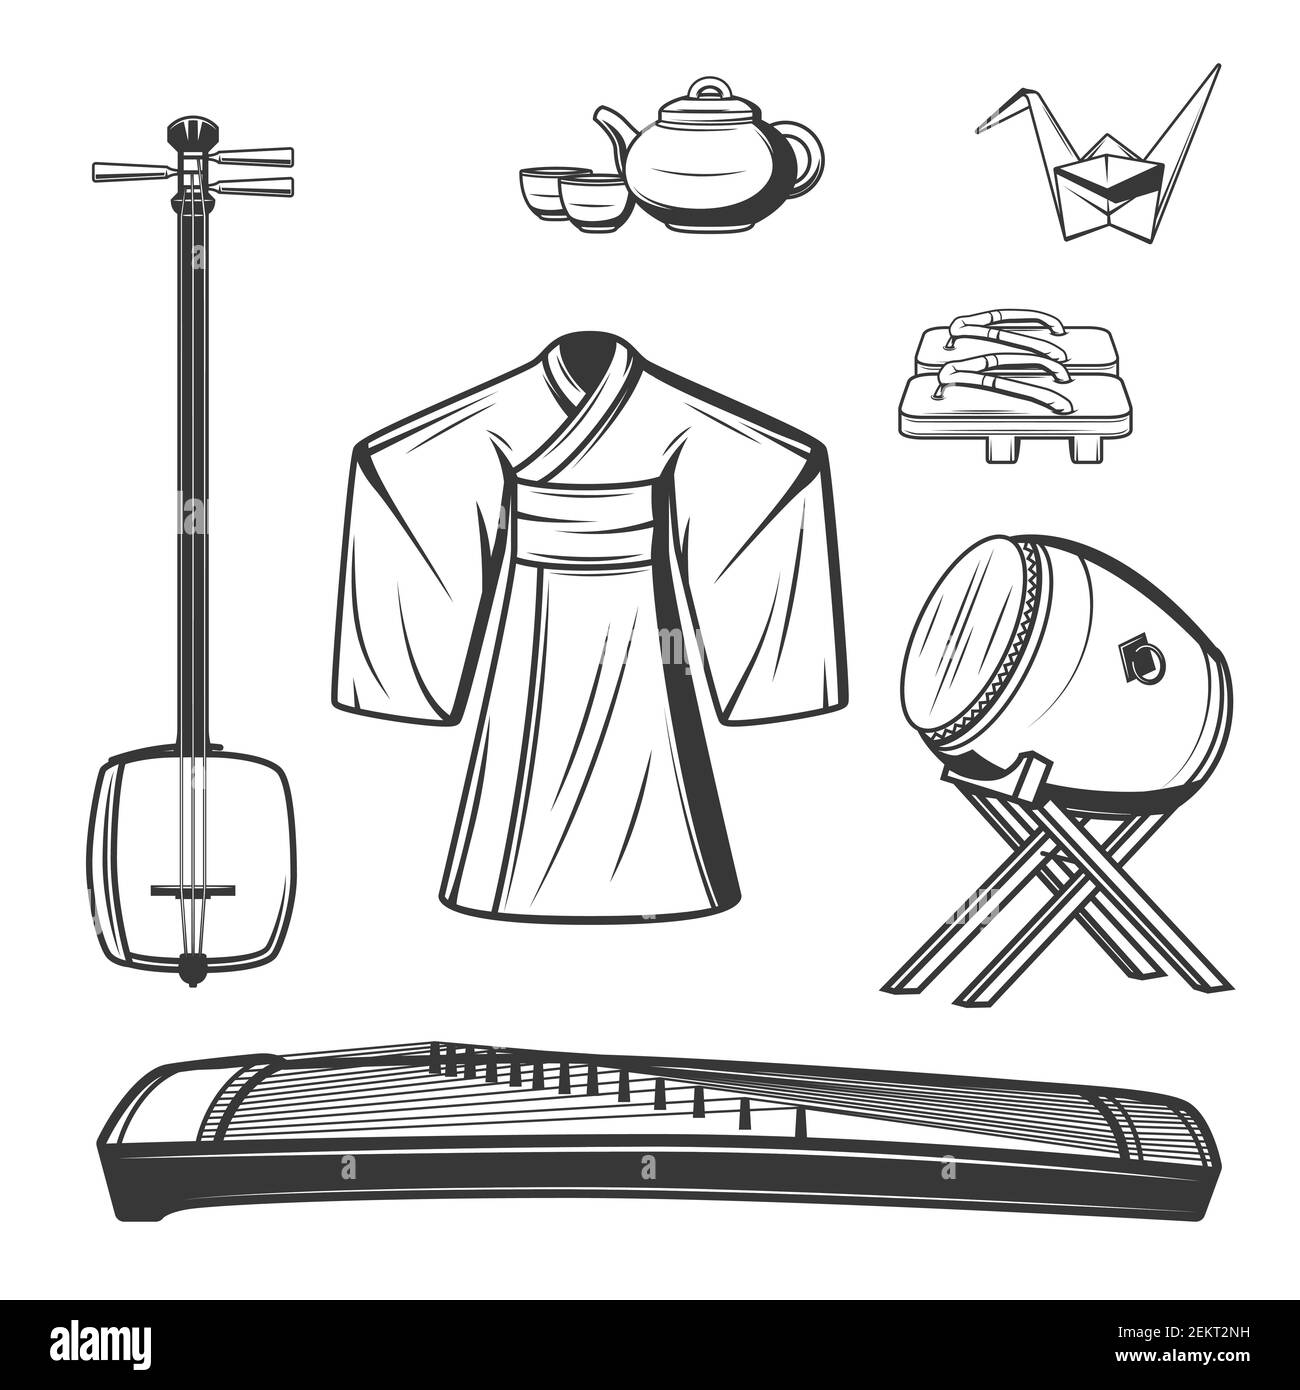 Black White Sketch Woman Kimono Stock Illustration 1362728162  Shutterstock